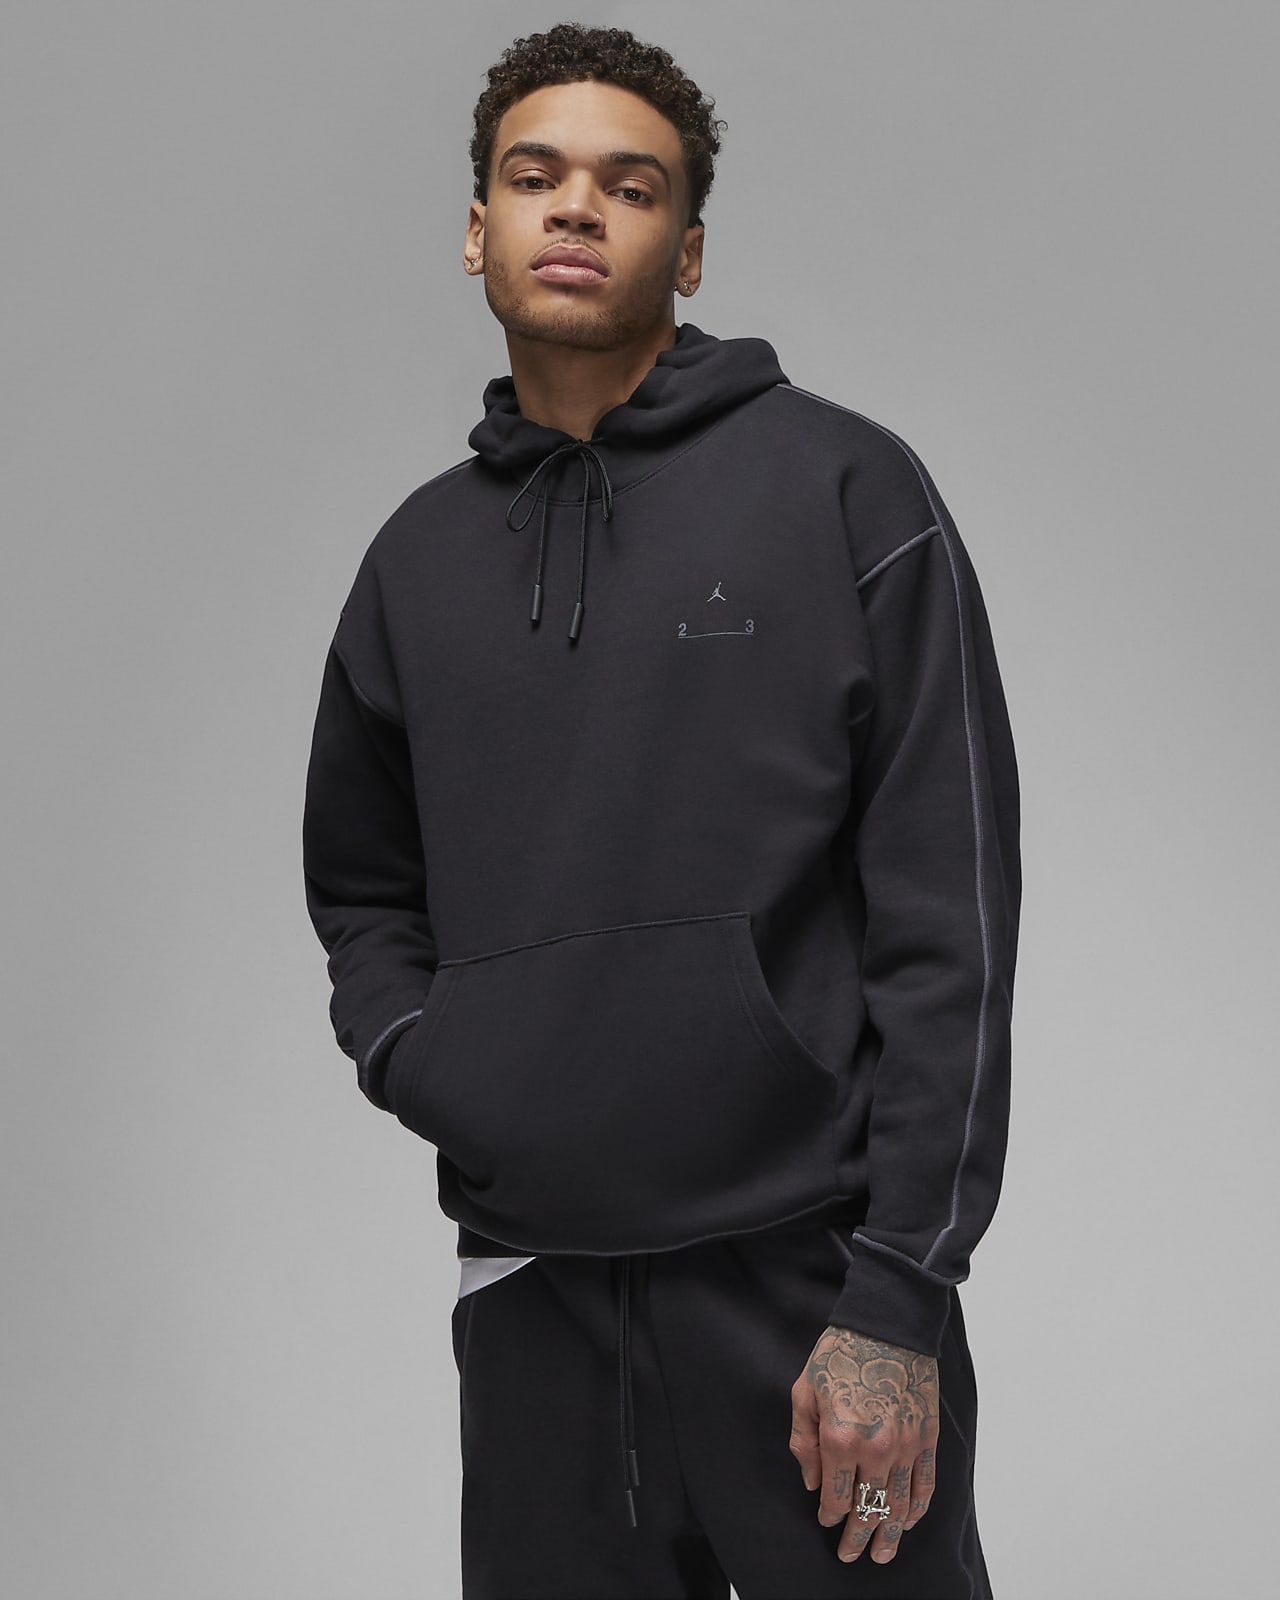 23 Engineered Men's Fleece Sweatshirt. Nike